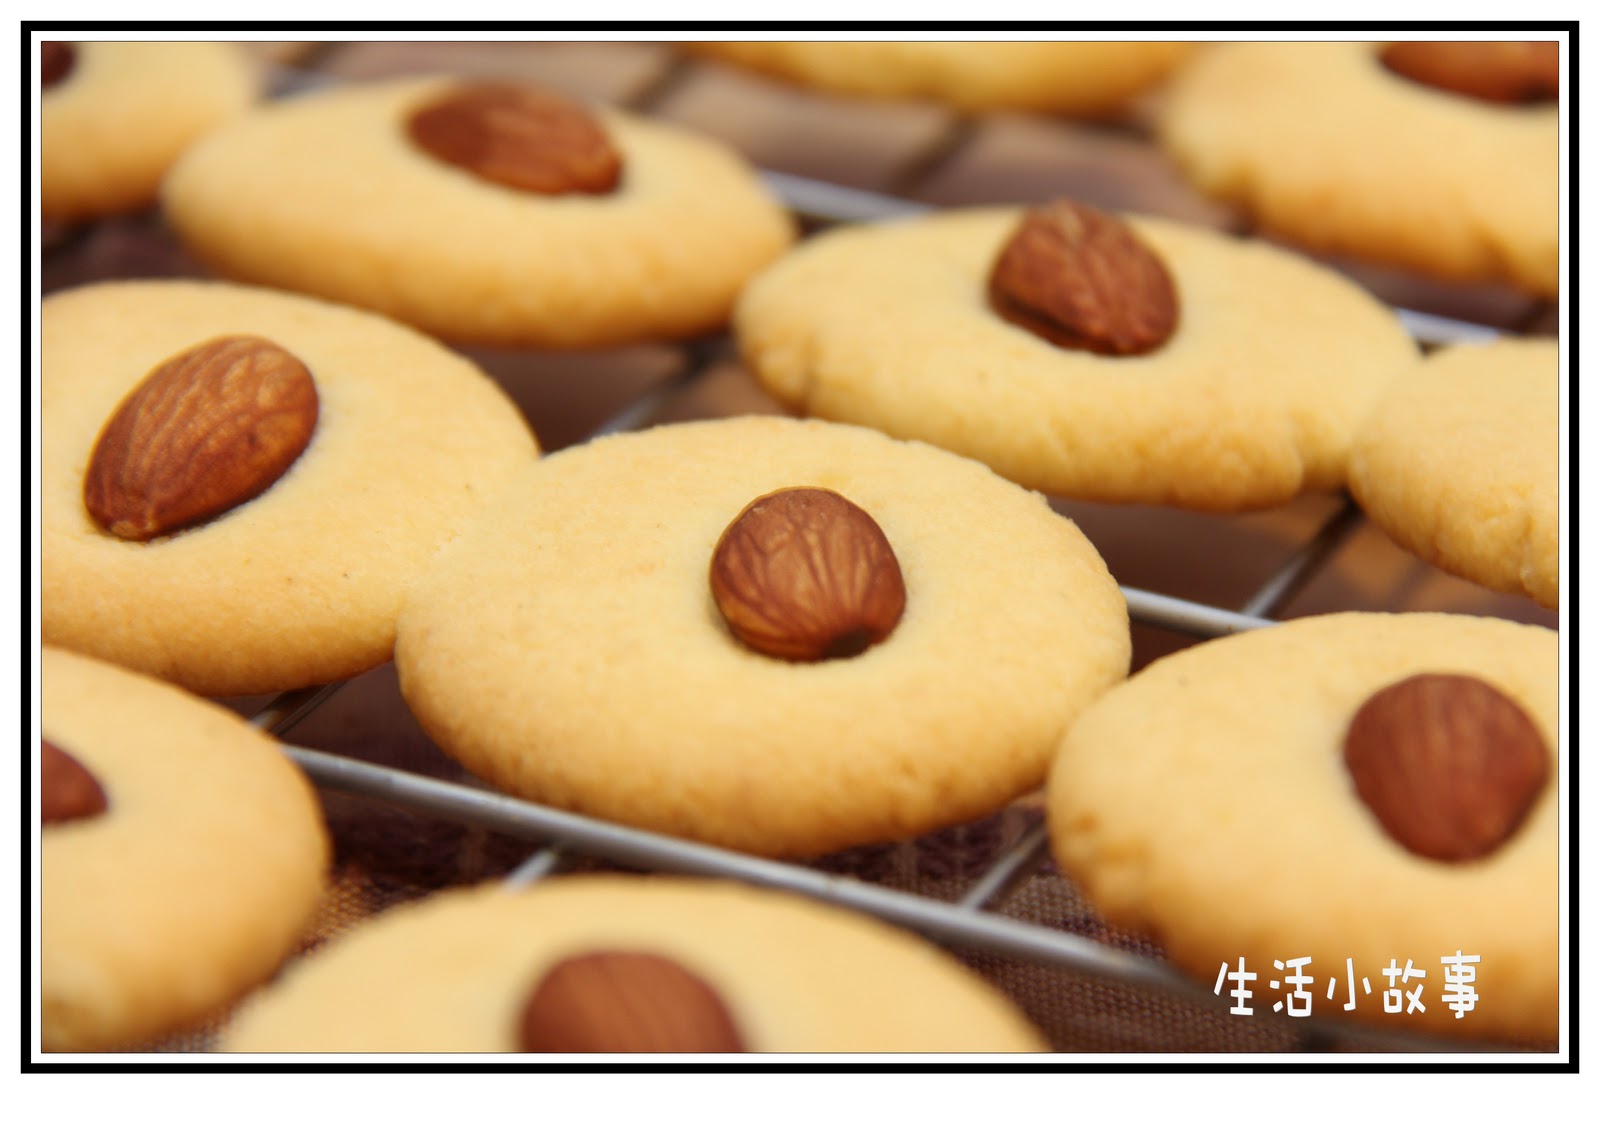 Lucky Inn: 杏仁酥饼 Almond Cookies